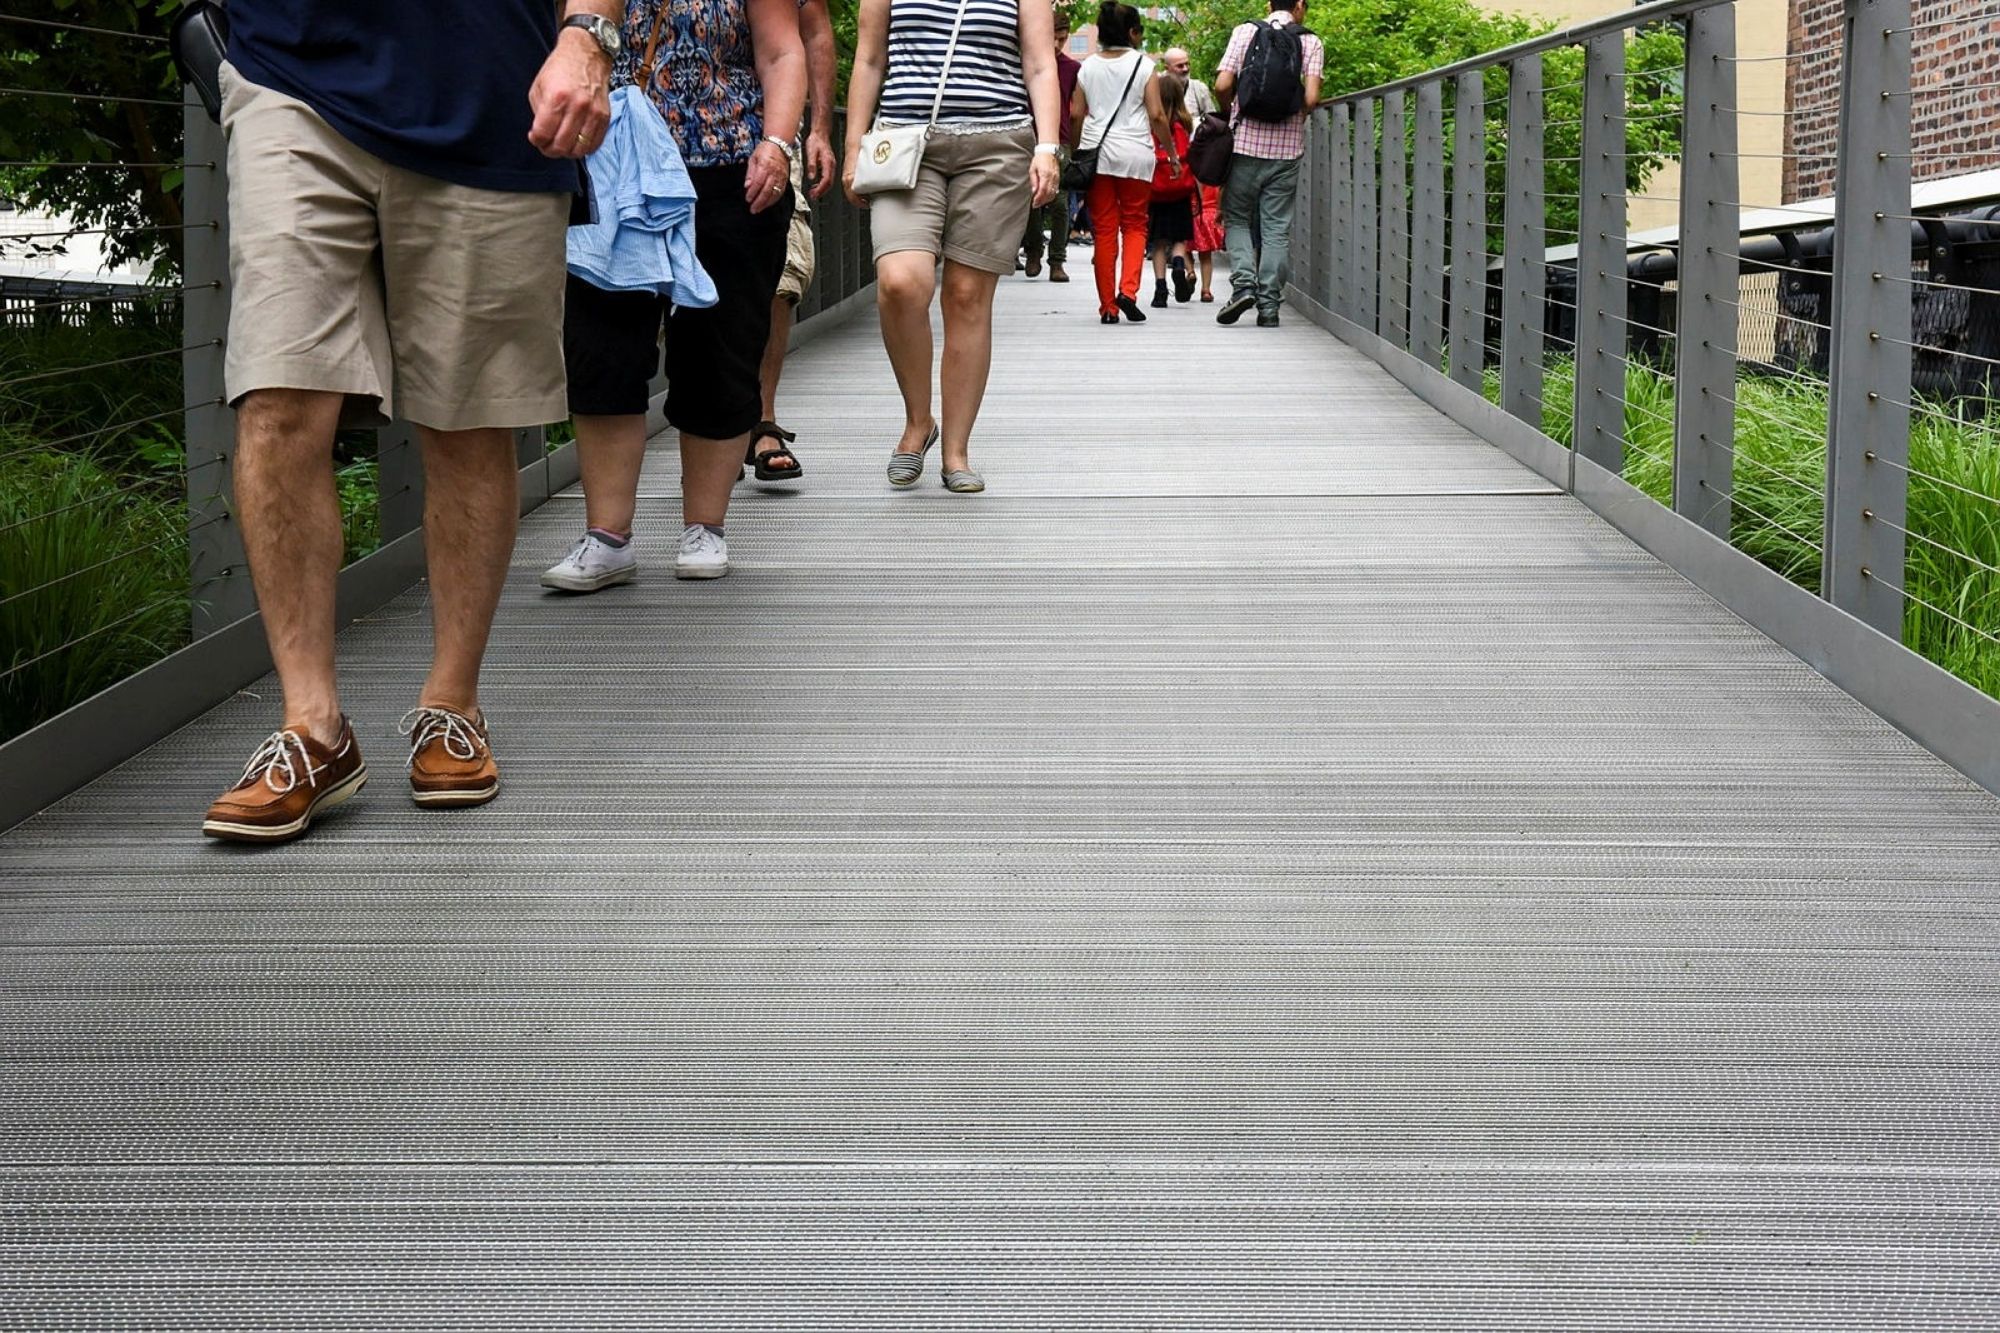 Pedestrians utilize grating bridge at Highline Park in New York